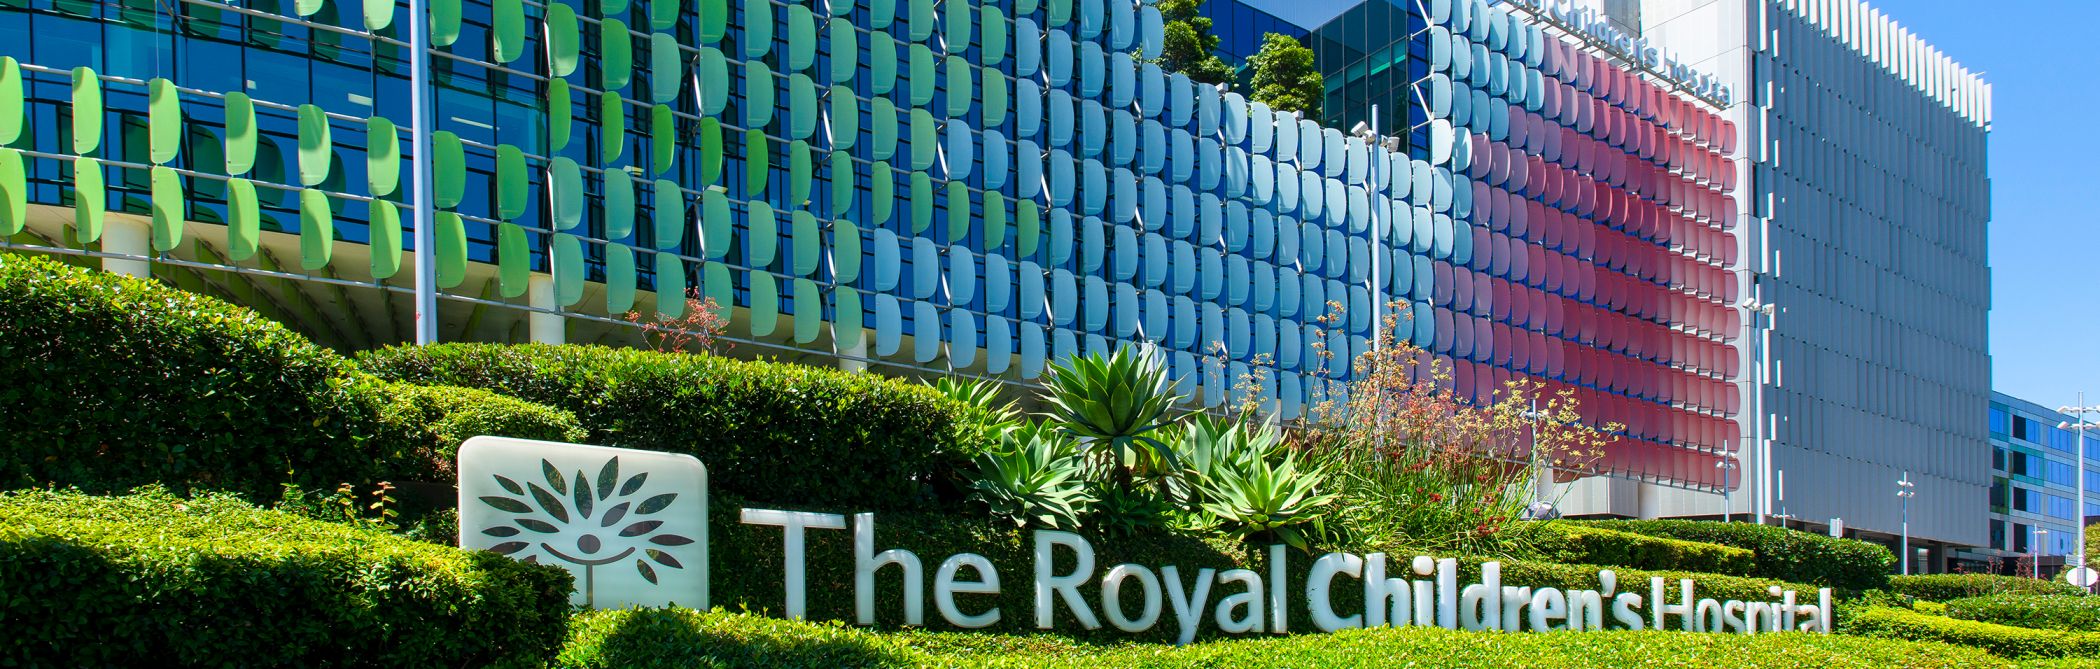 Royal Childrens Hospital External